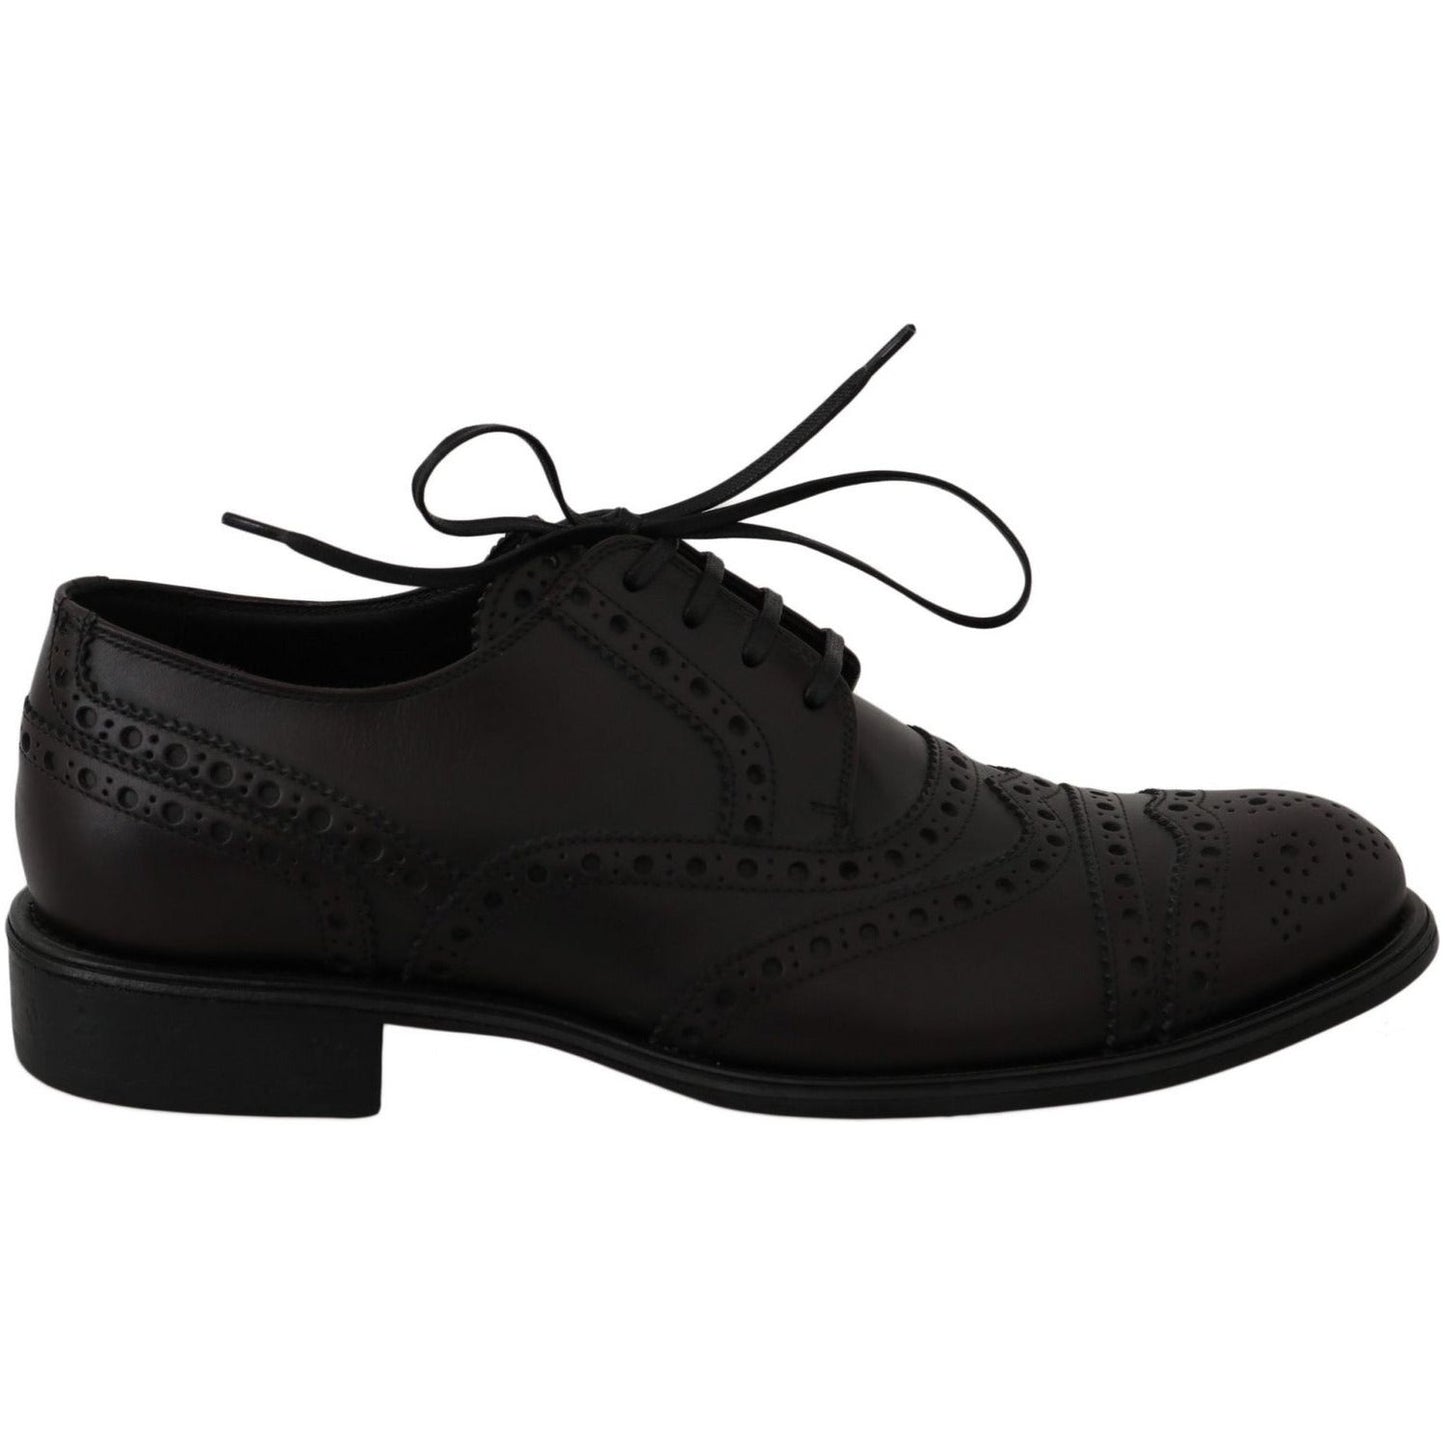 Dolce & Gabbana Elegant Bordeaux Wingtip Derby Dress Shoes black-leather-wingtip-oxford-dress-shoes-1 Dress Shoes IMG_8972-scaled_fe7a4bcc-dc69-4abb-b300-55d74375eeff.jpg